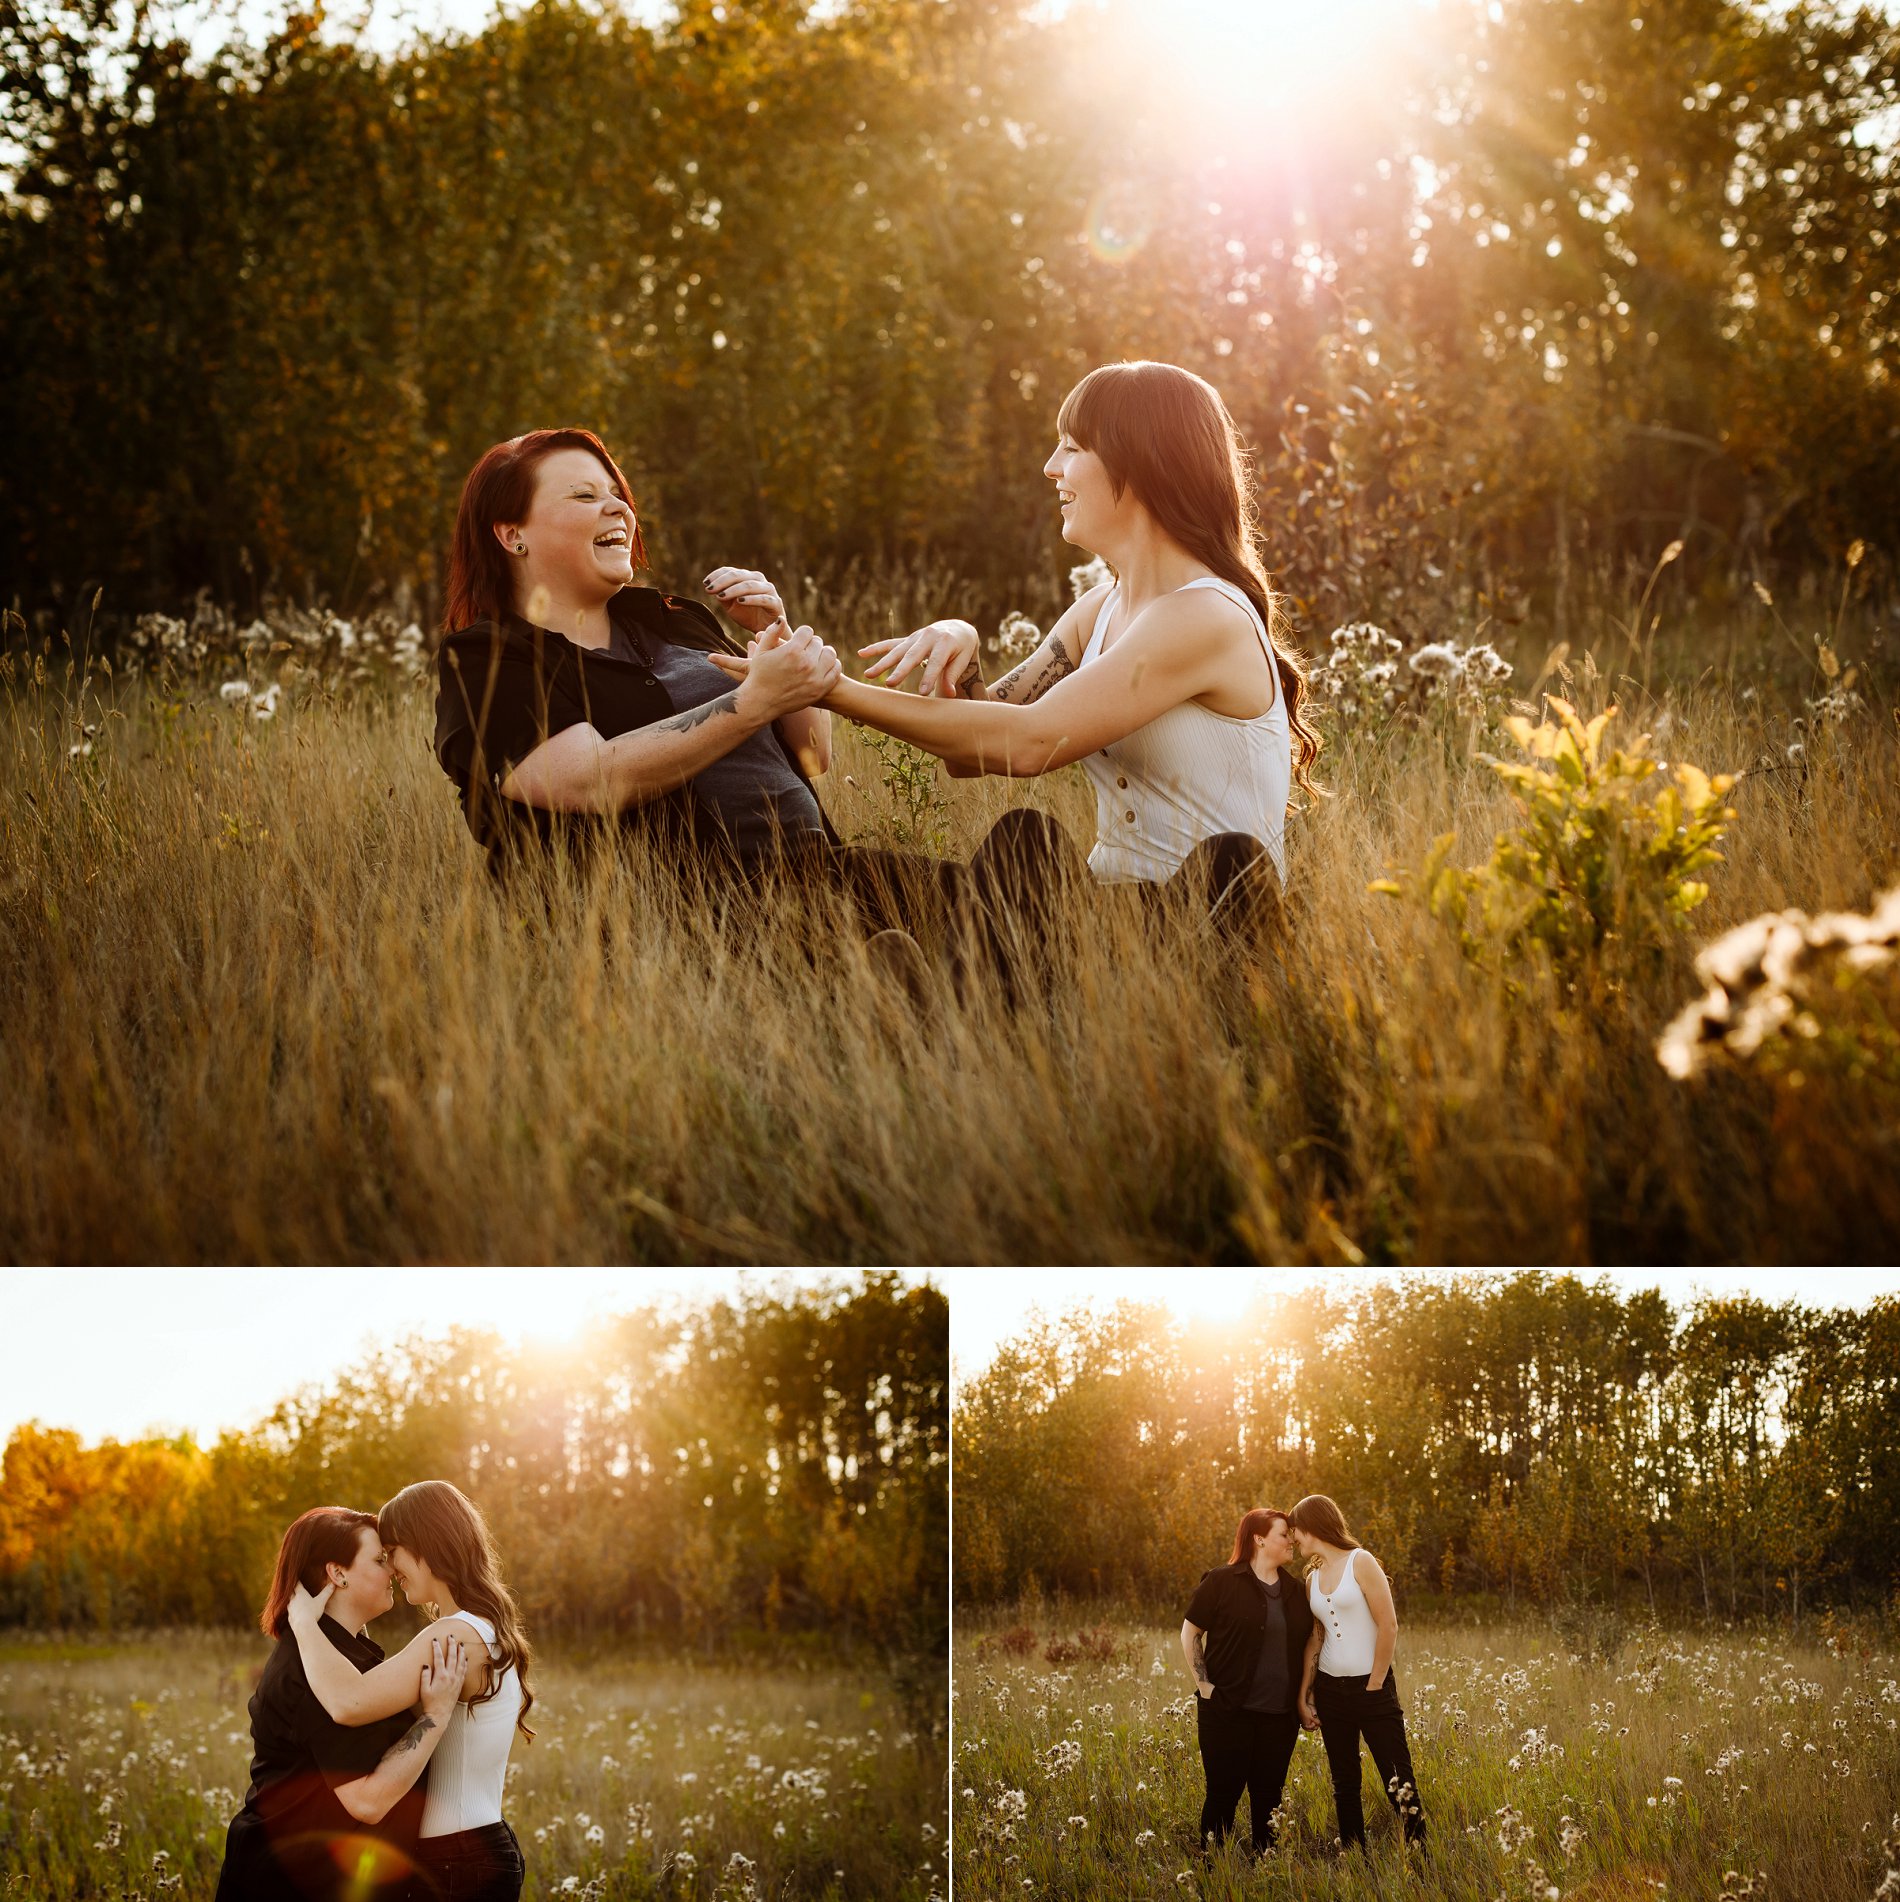 Lesbian wedding proposal photography in Saskatoon.